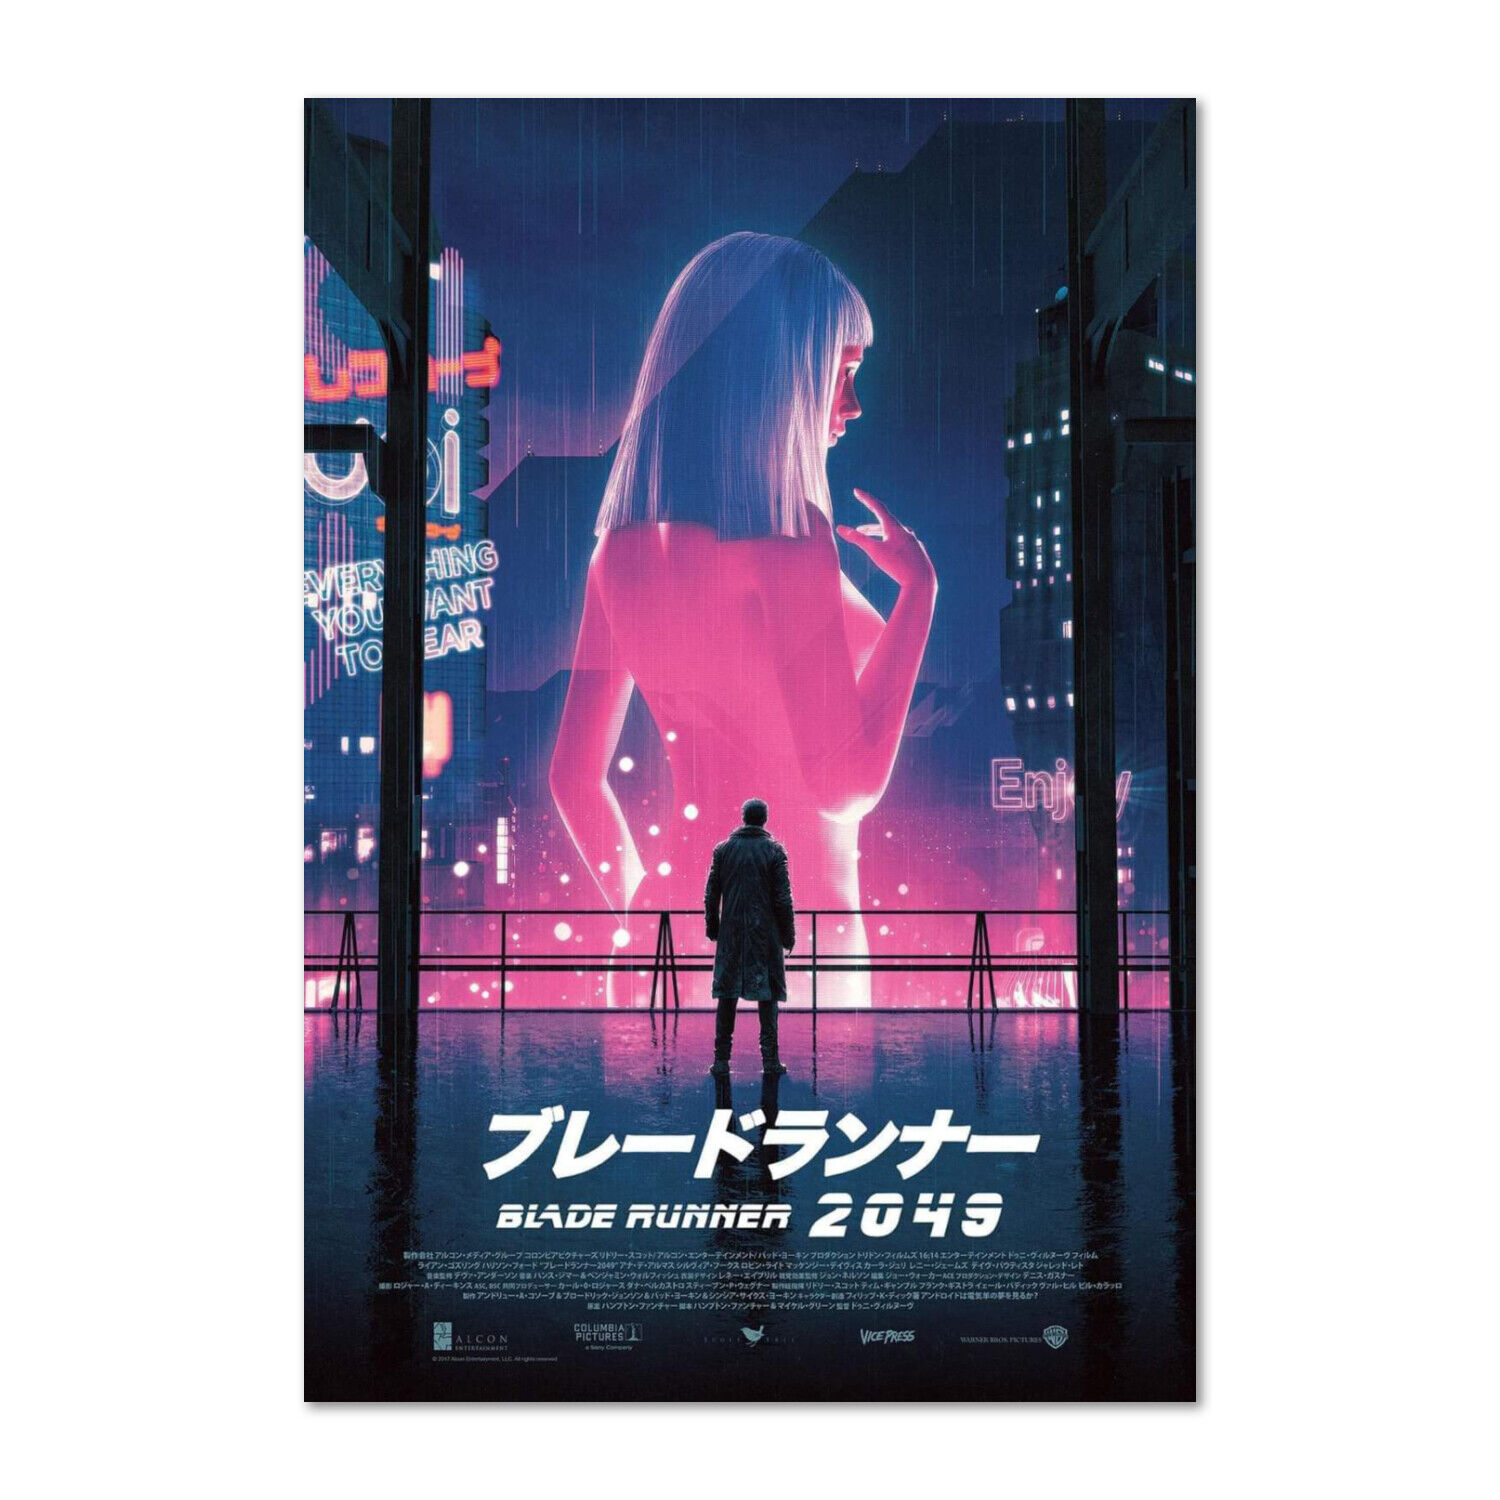 Blade Runner 2049 Poster | Japan Key Art | High Quality Prints